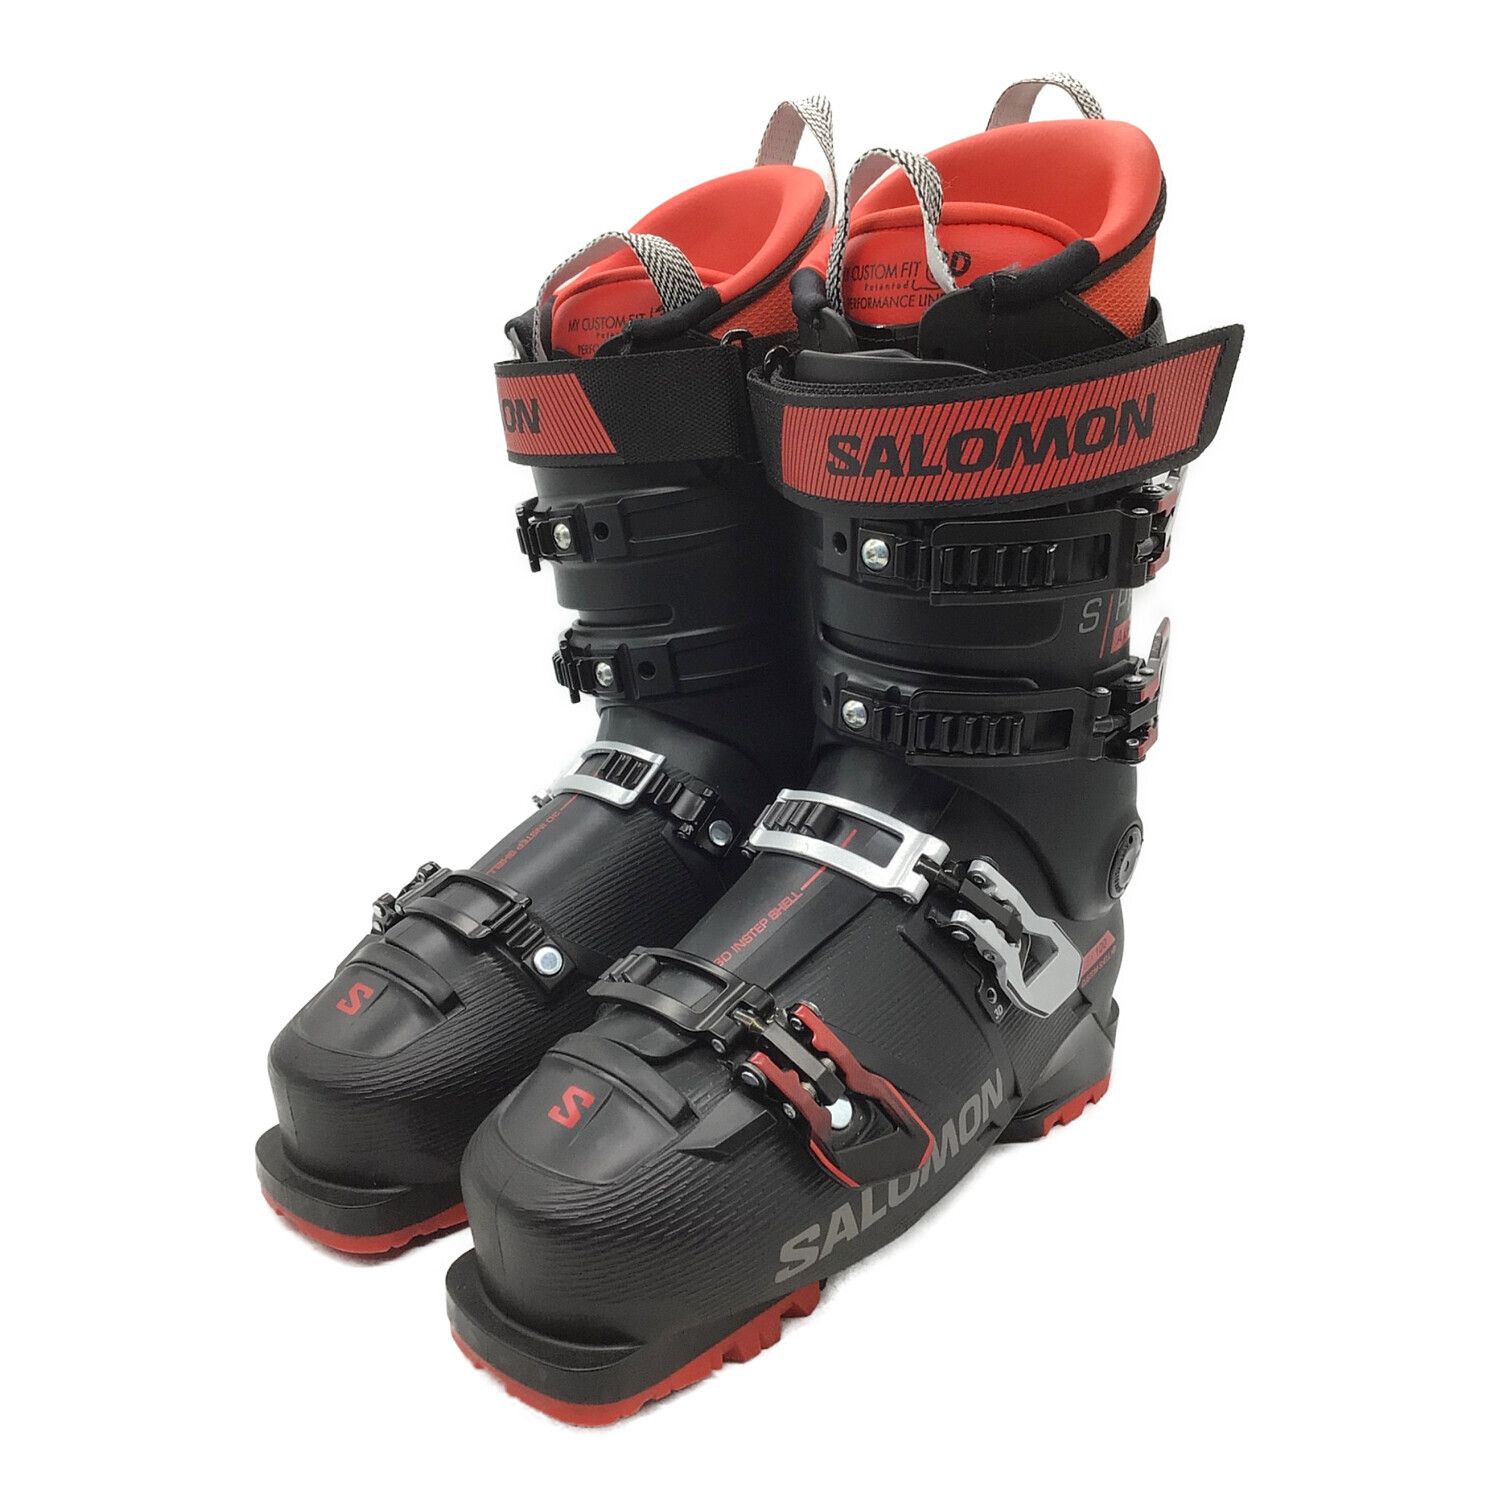 SALOMON(サロモン) X MAX 120 スキーブーツ 大人用 レーサー - スキー